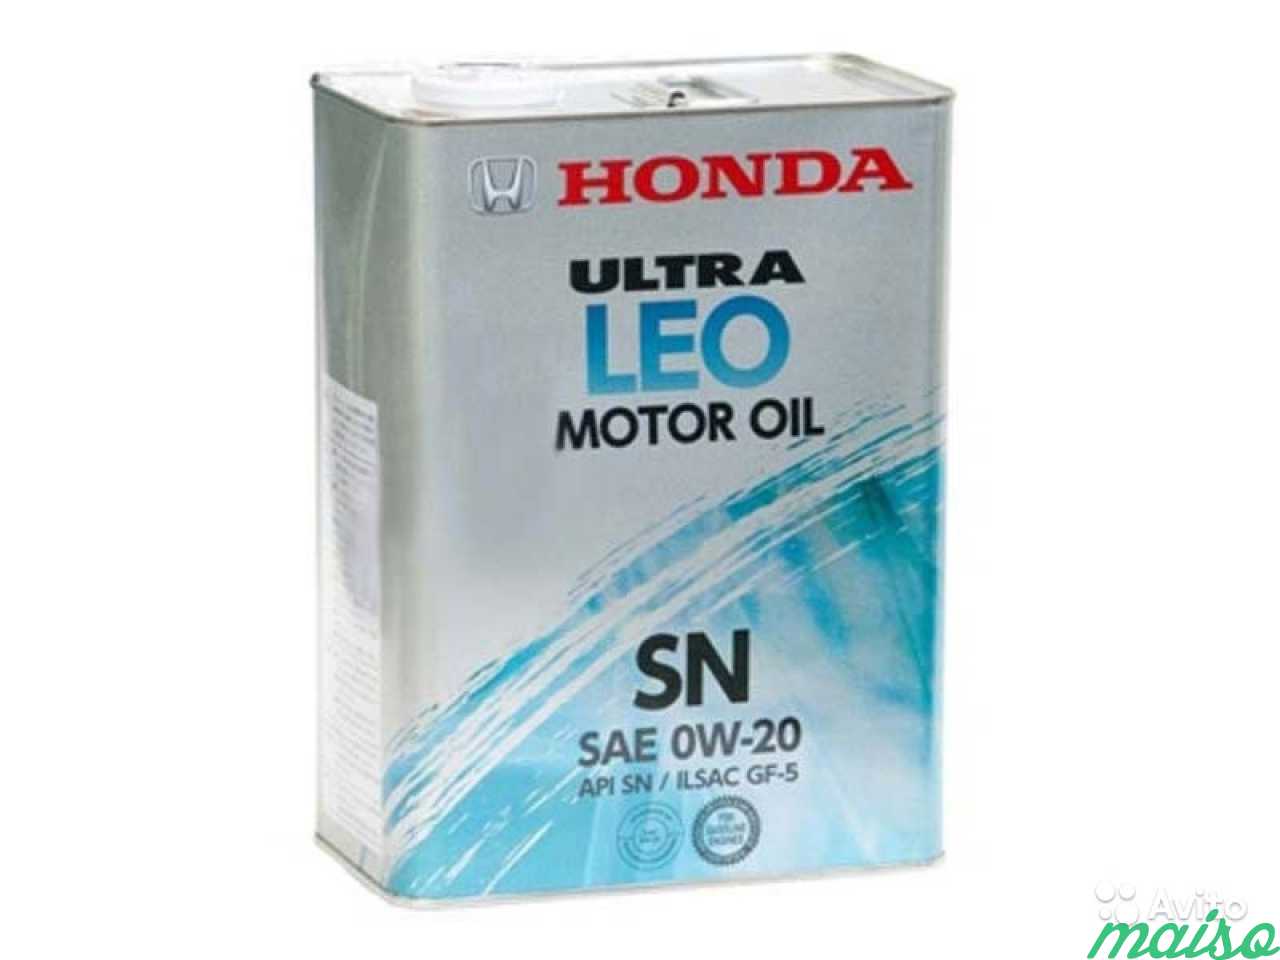 Моторные масла honda купить. Honda Ultra Leo 0w20. Масло Honda Ultra Leo 0w20. Honda Ultra Leo 0w20 SN. Моторное масло Honda Ultra Leo 0w-20,.